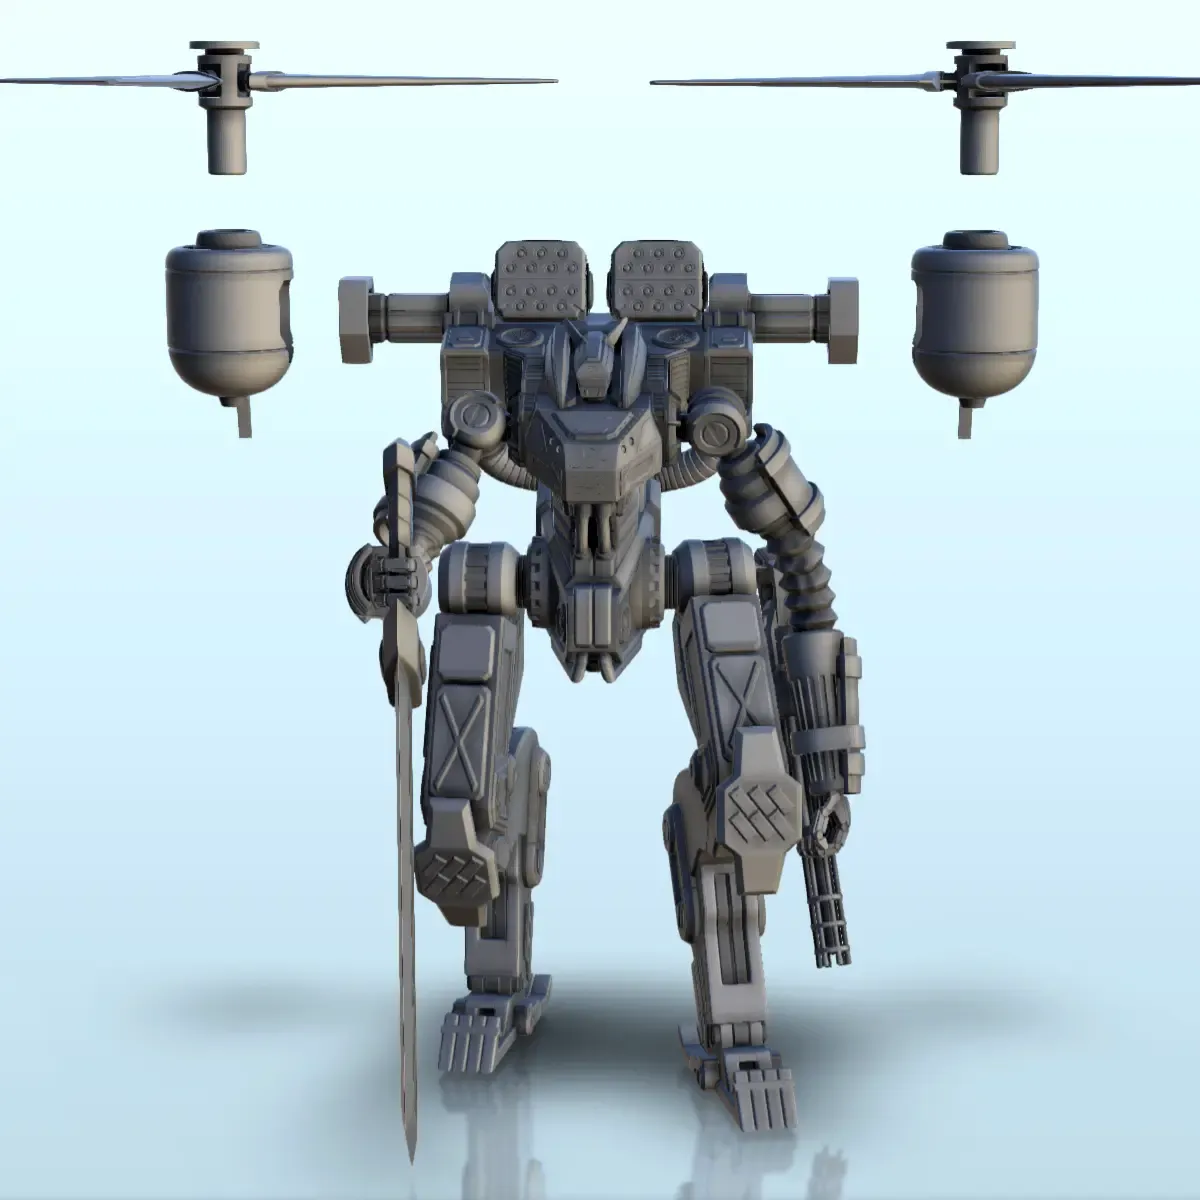 Ihris combat robot (6) - sci-fi science fiction future 40k b